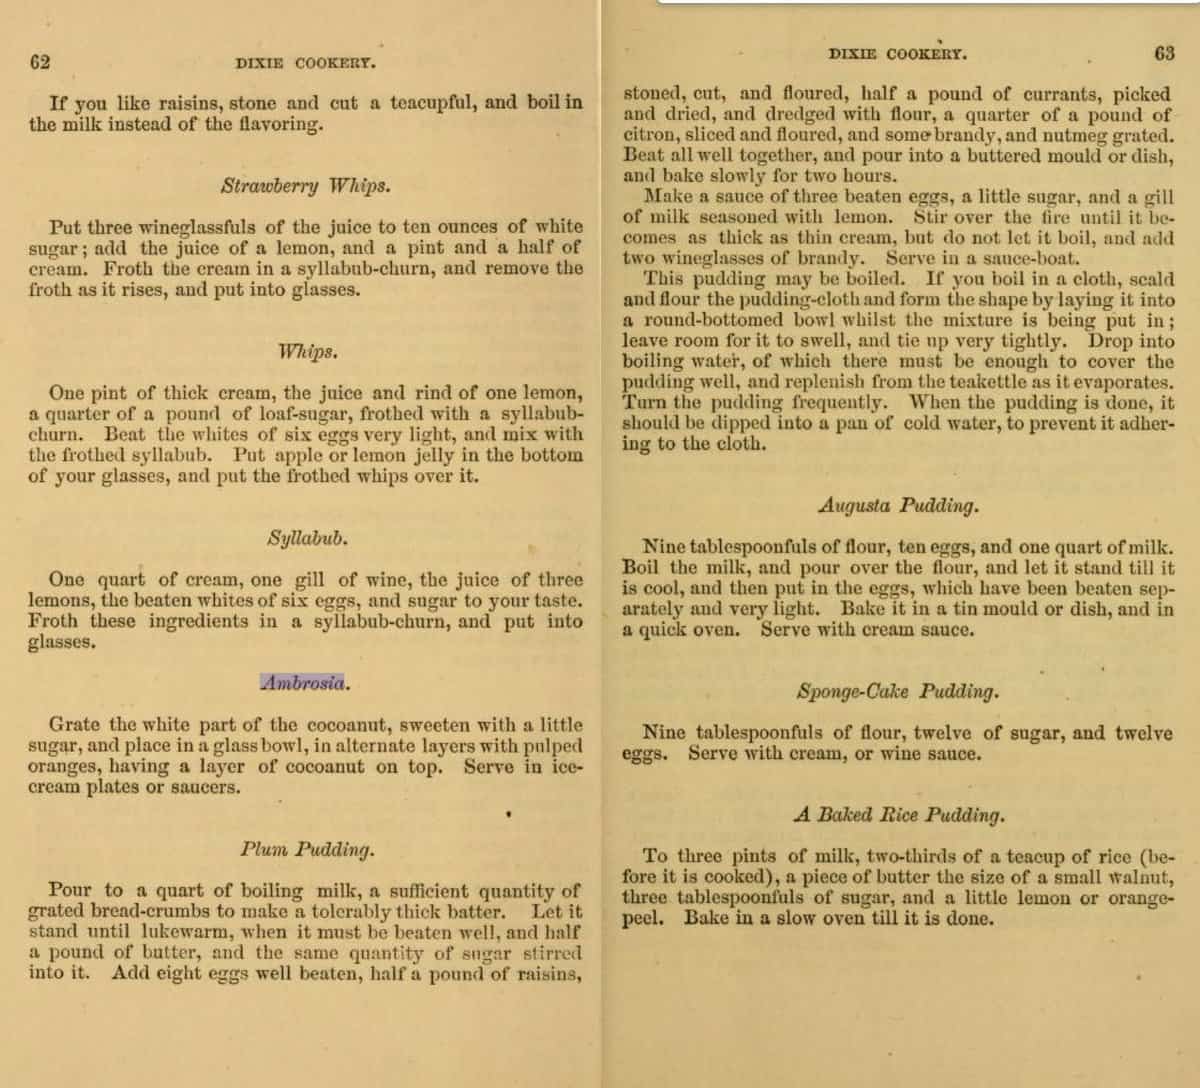 Original recipe for Ambrosia in the Dixie Cookery cookbook.